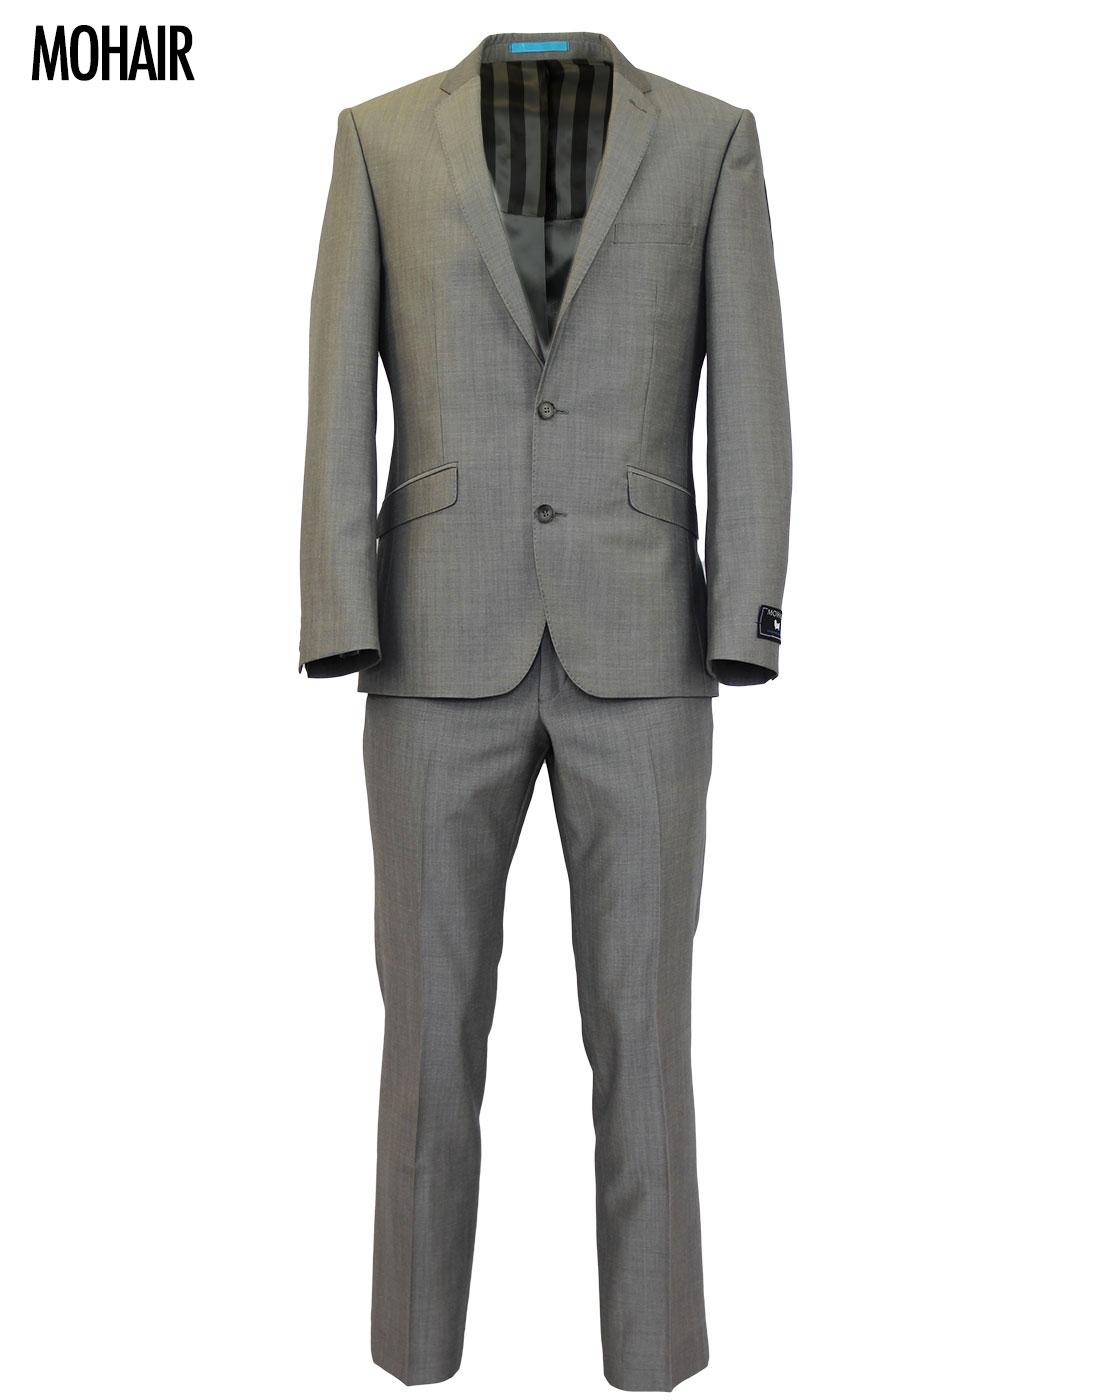 Retro 60s Mod Mohair Blend 2 Button Suit in Silver